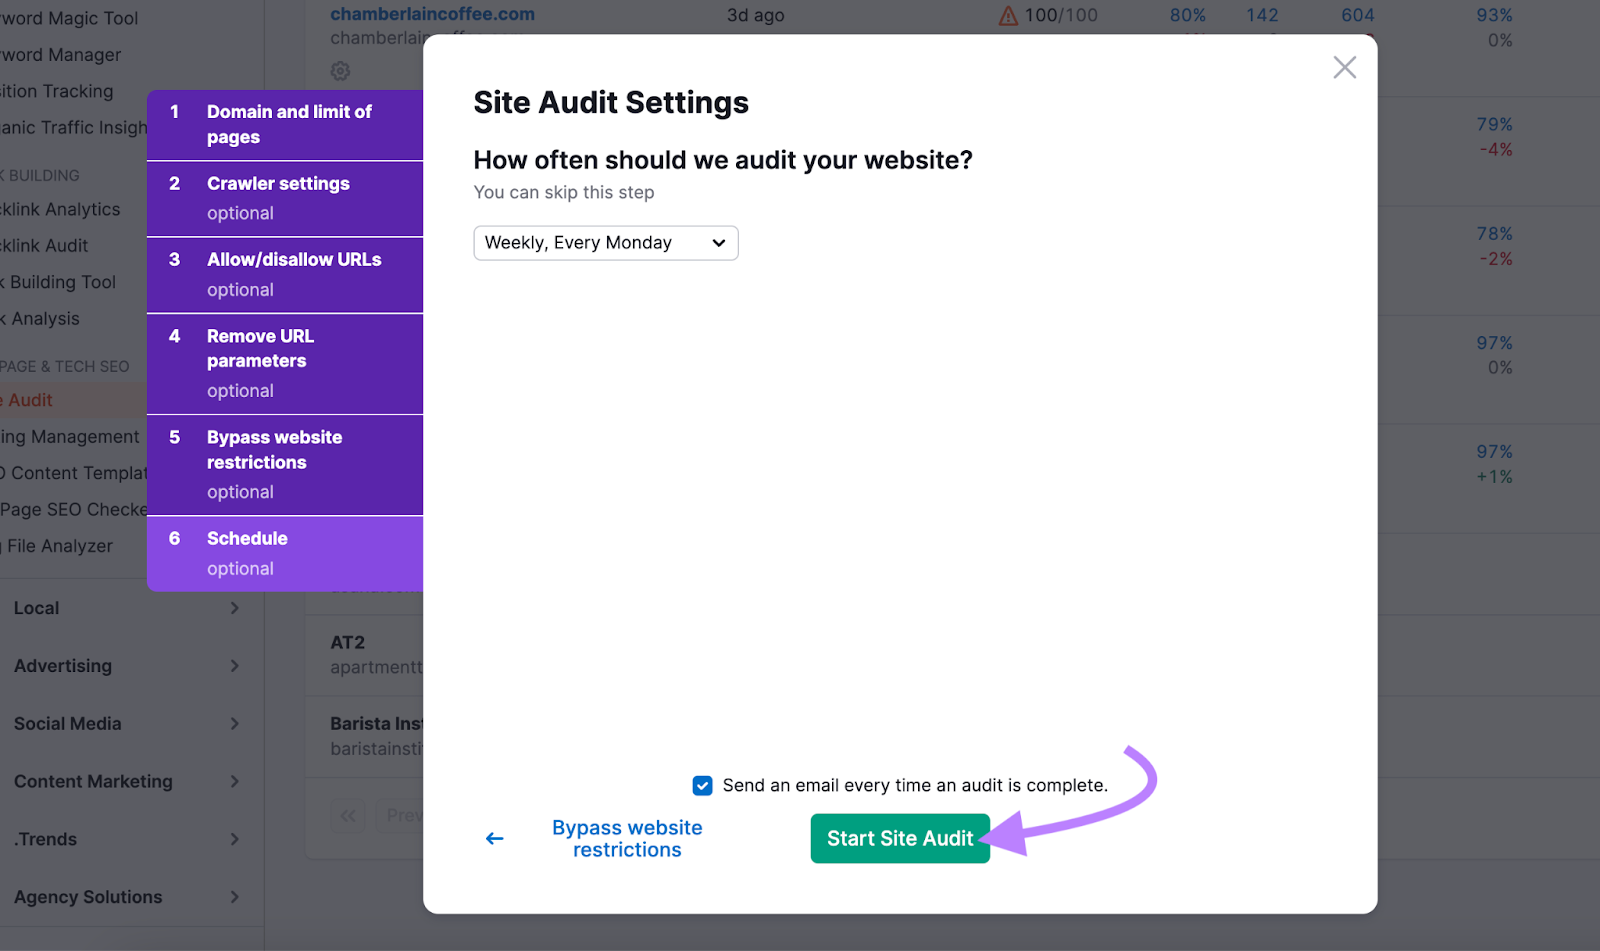 "Start Site Audit" button